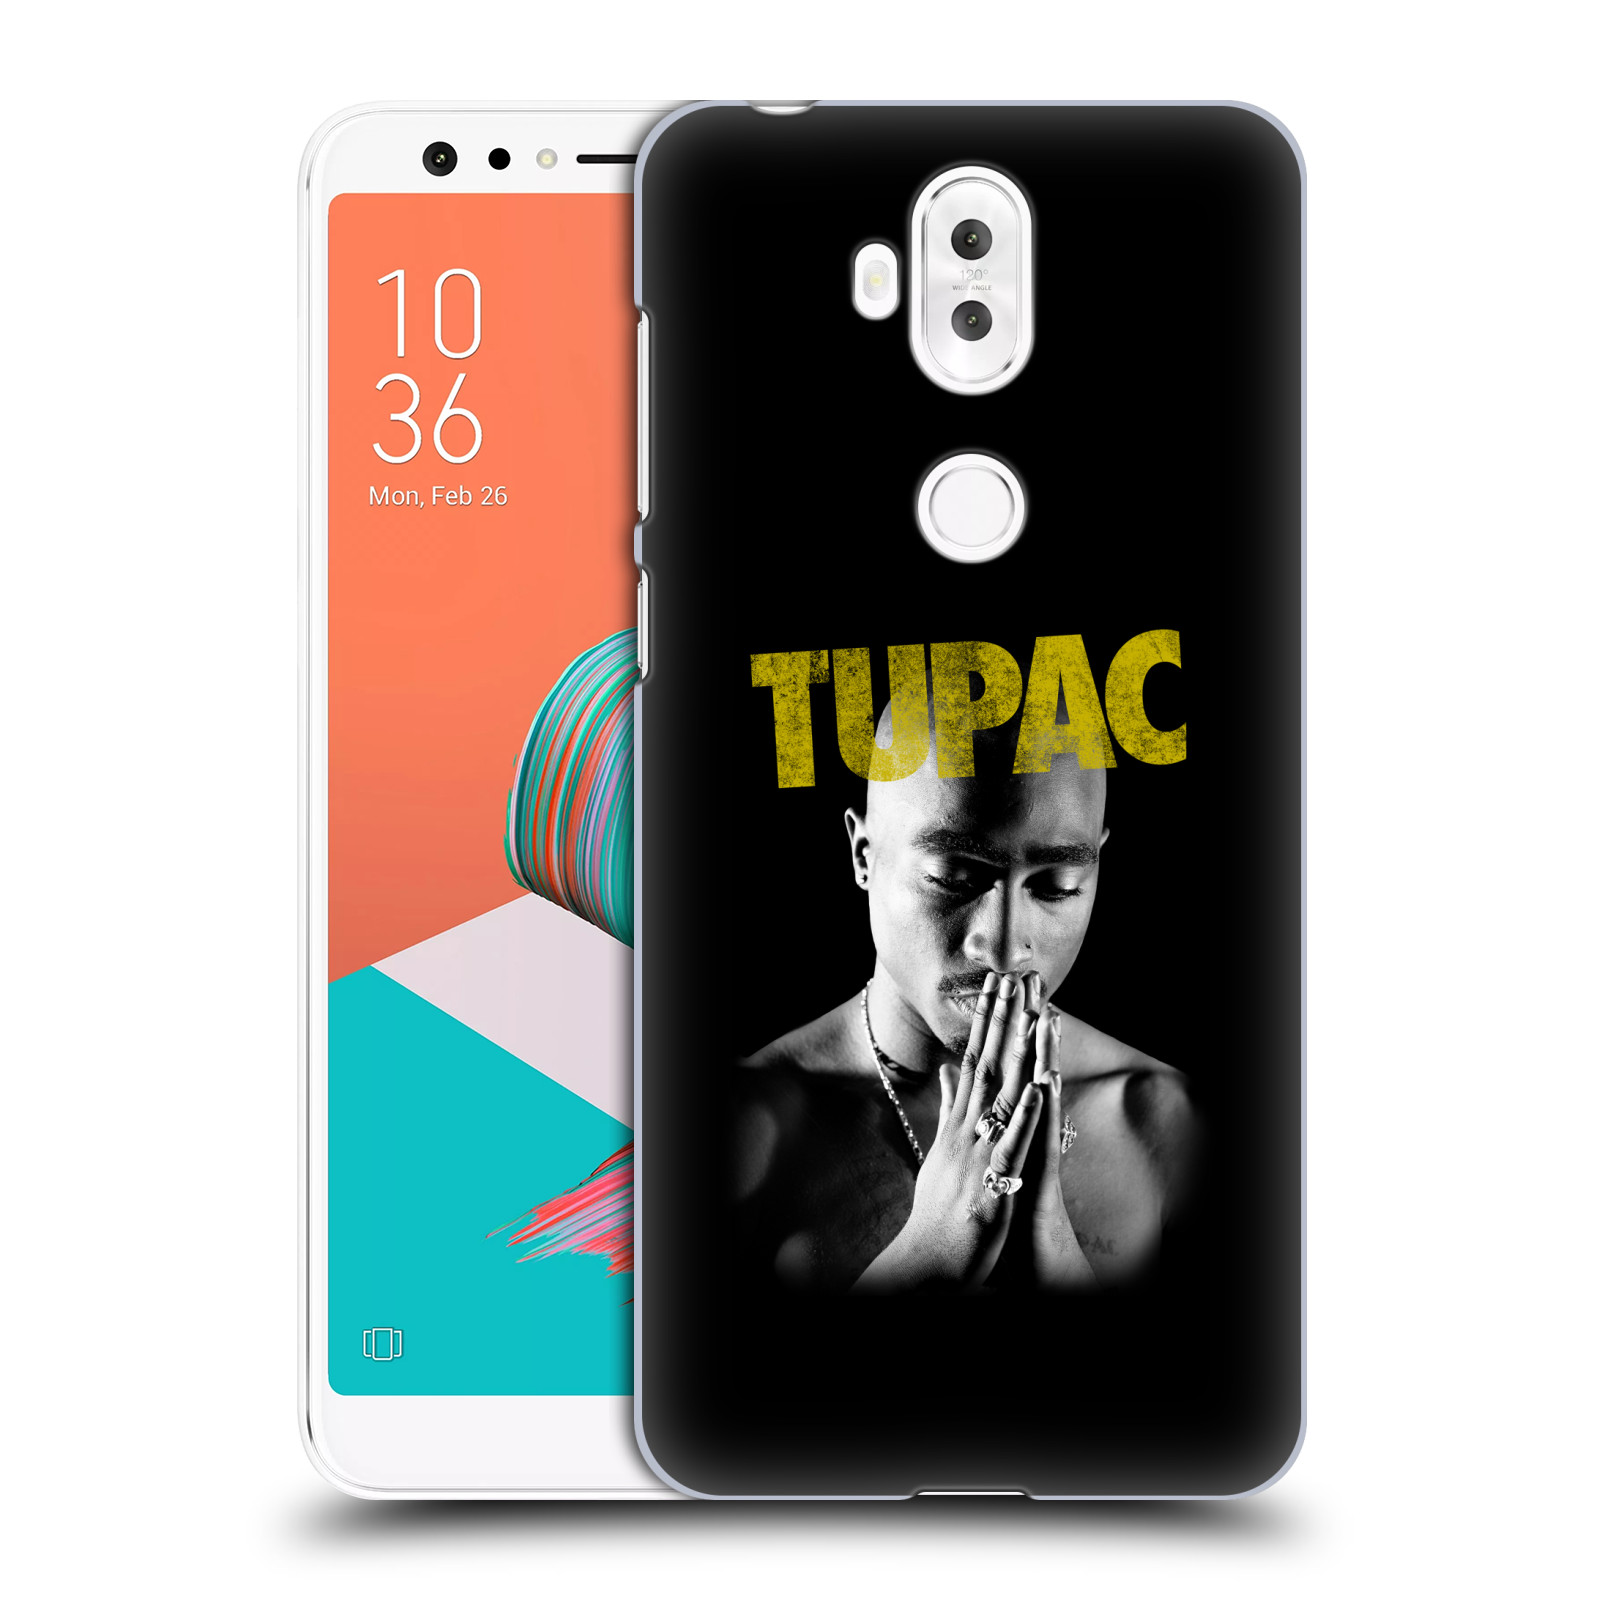 HEAD CASE plastový obal na mobil Asus Zenfone 5 LITE ZC600KL Zpěvák rapper Tupac Shakur 2Pac zlatý nadpis